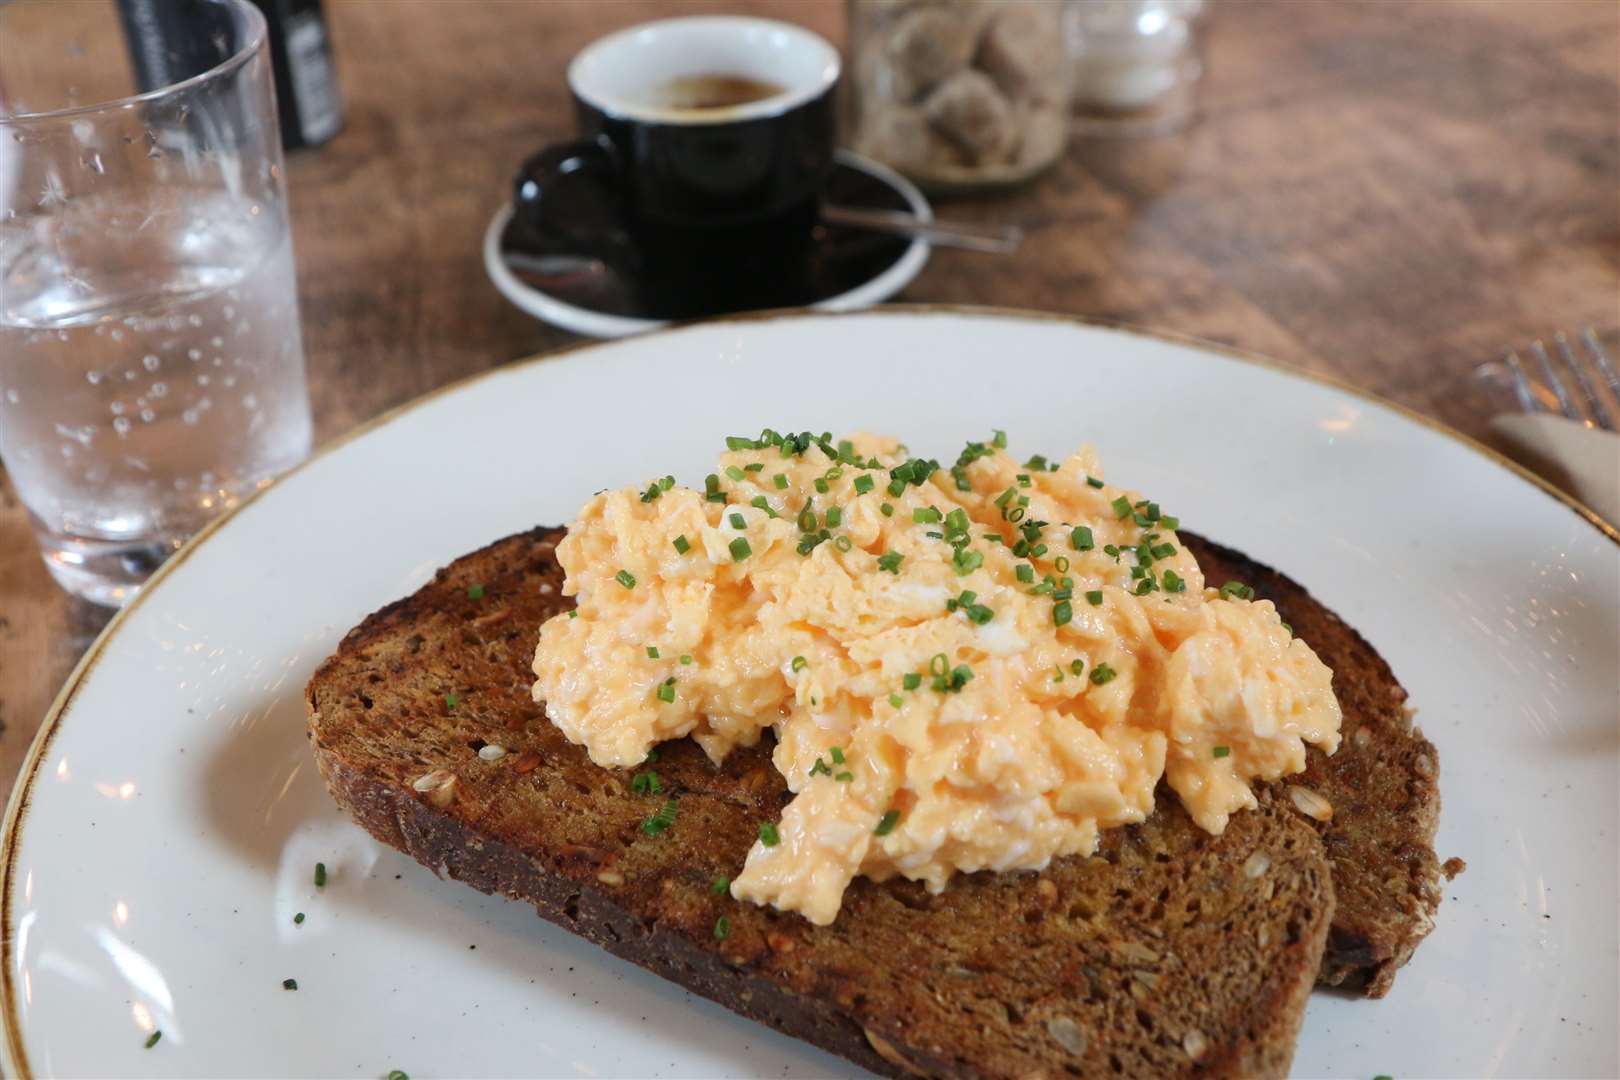 Scrambled eggs on toast and espresso